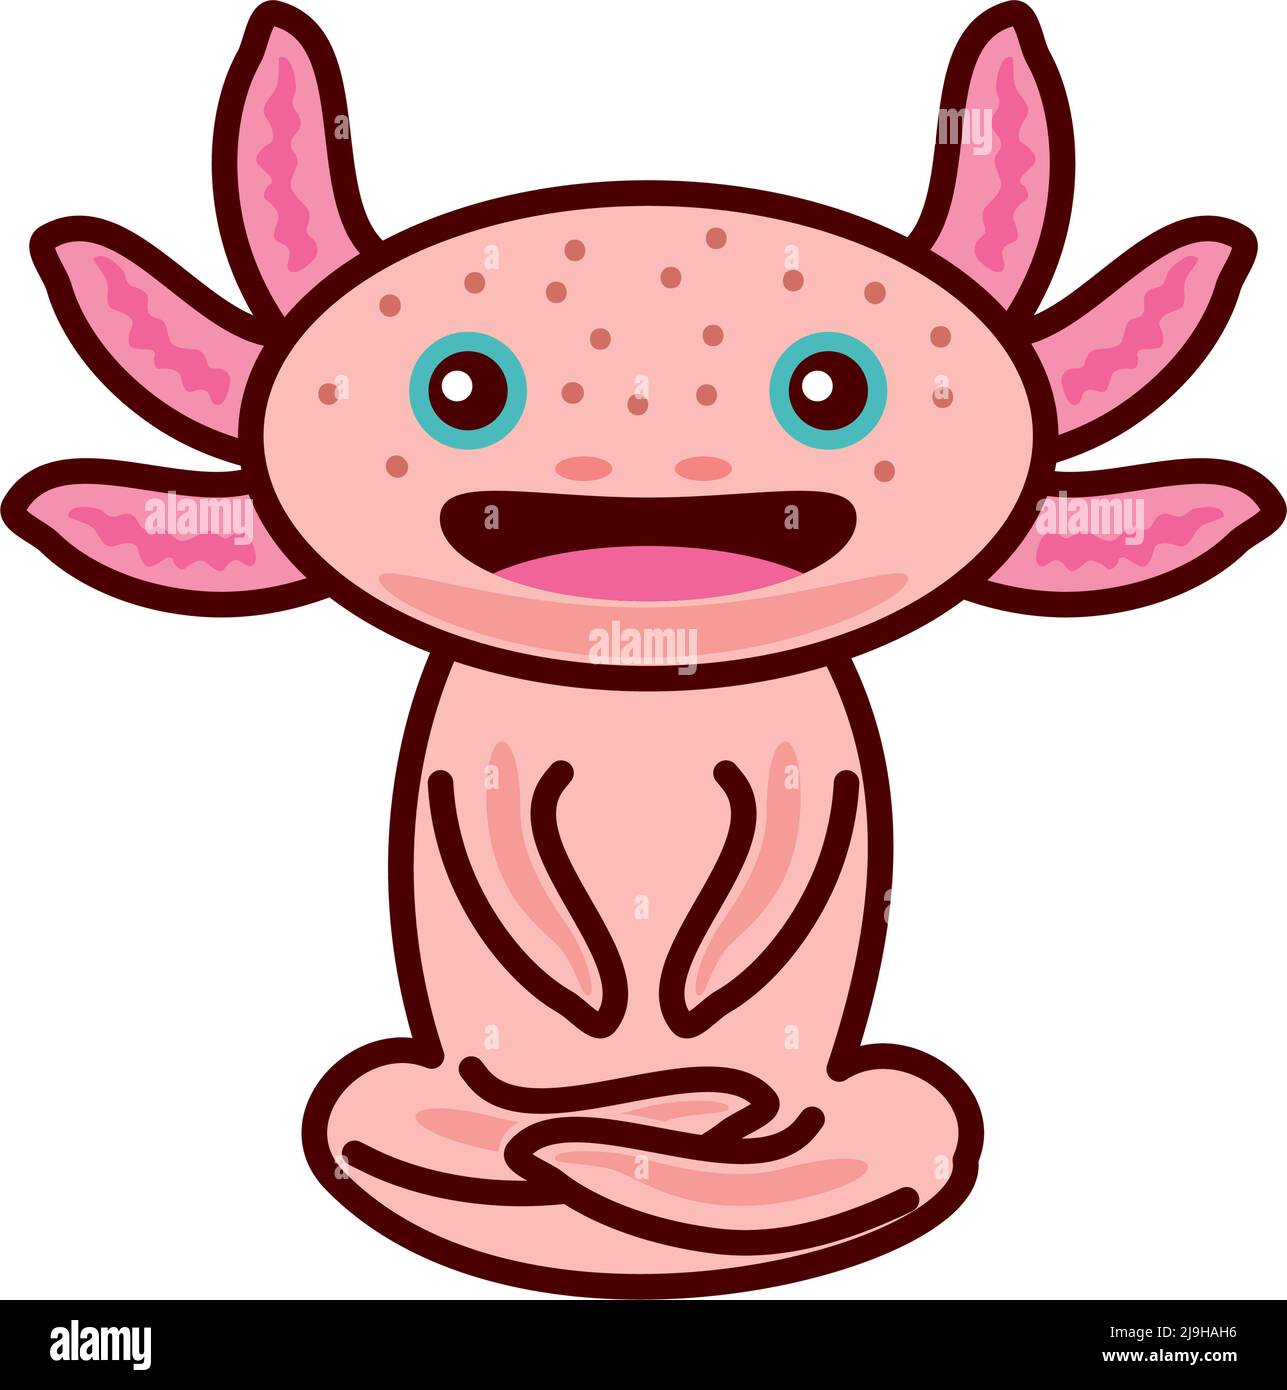 Axolotl Cartoon Images  Free Download on Freepik